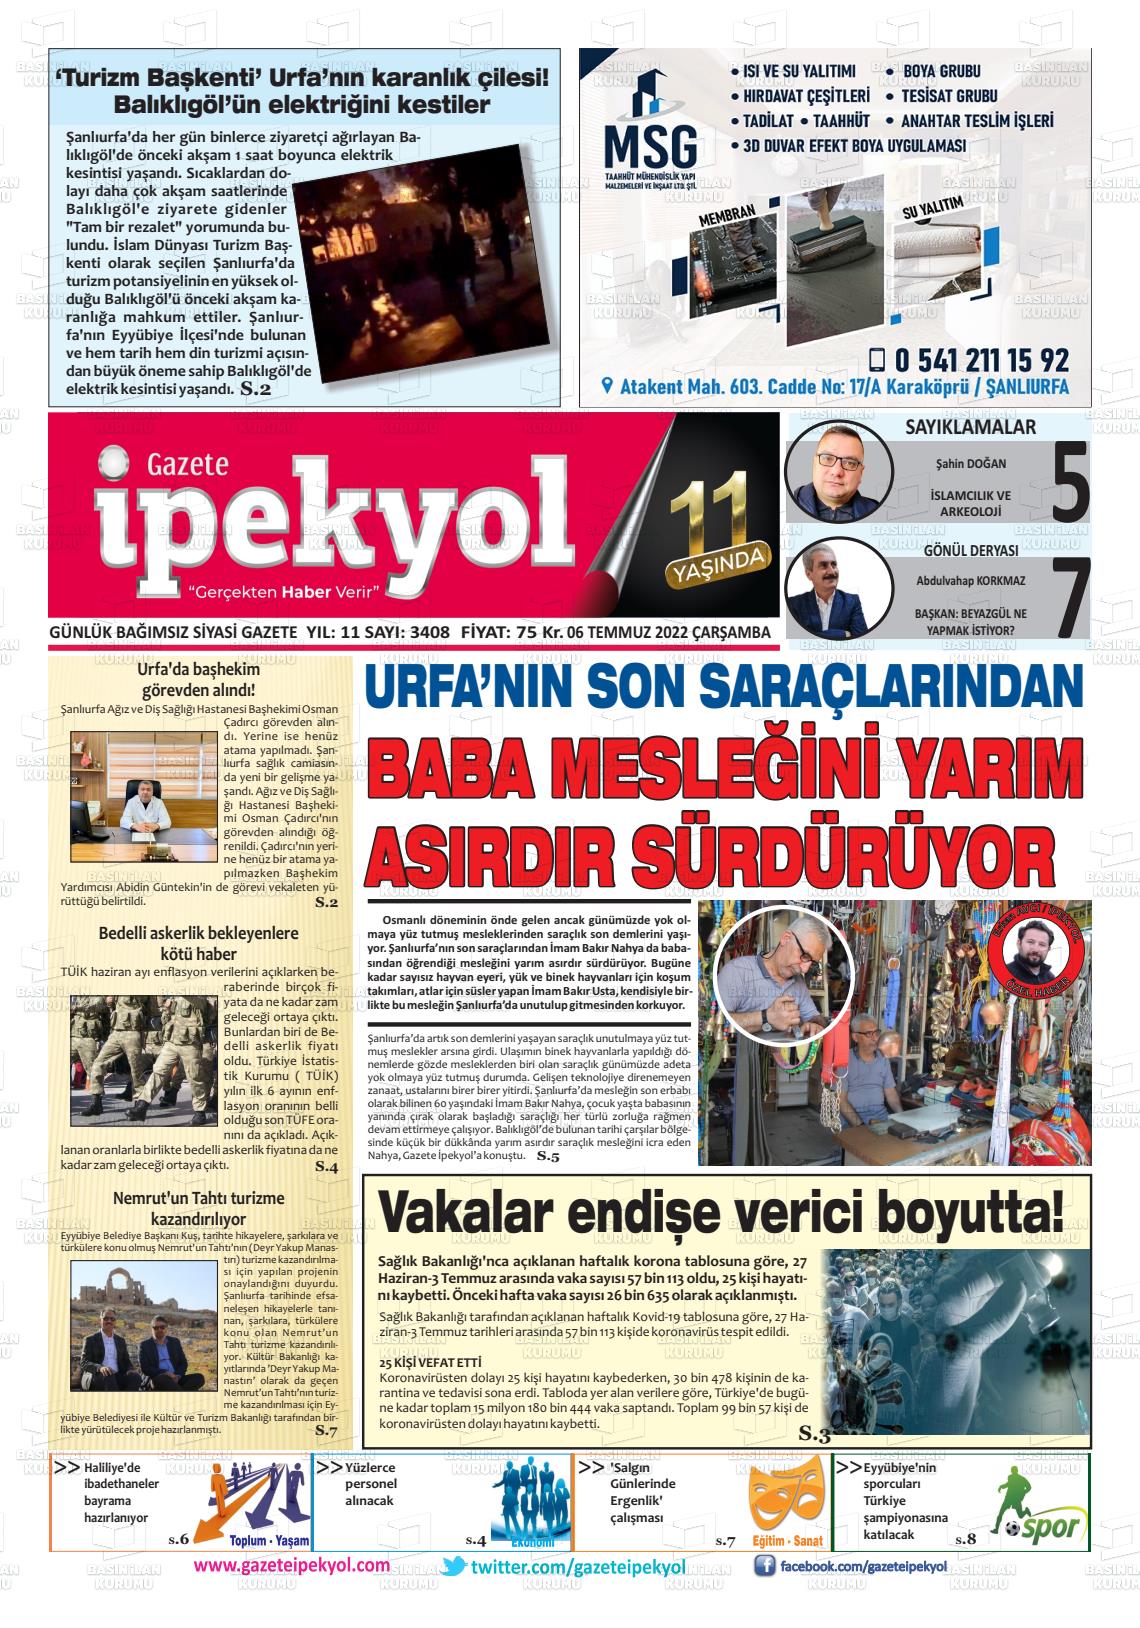 06 Temmuz 2022 Gazete İpekyol Gazete Manşeti